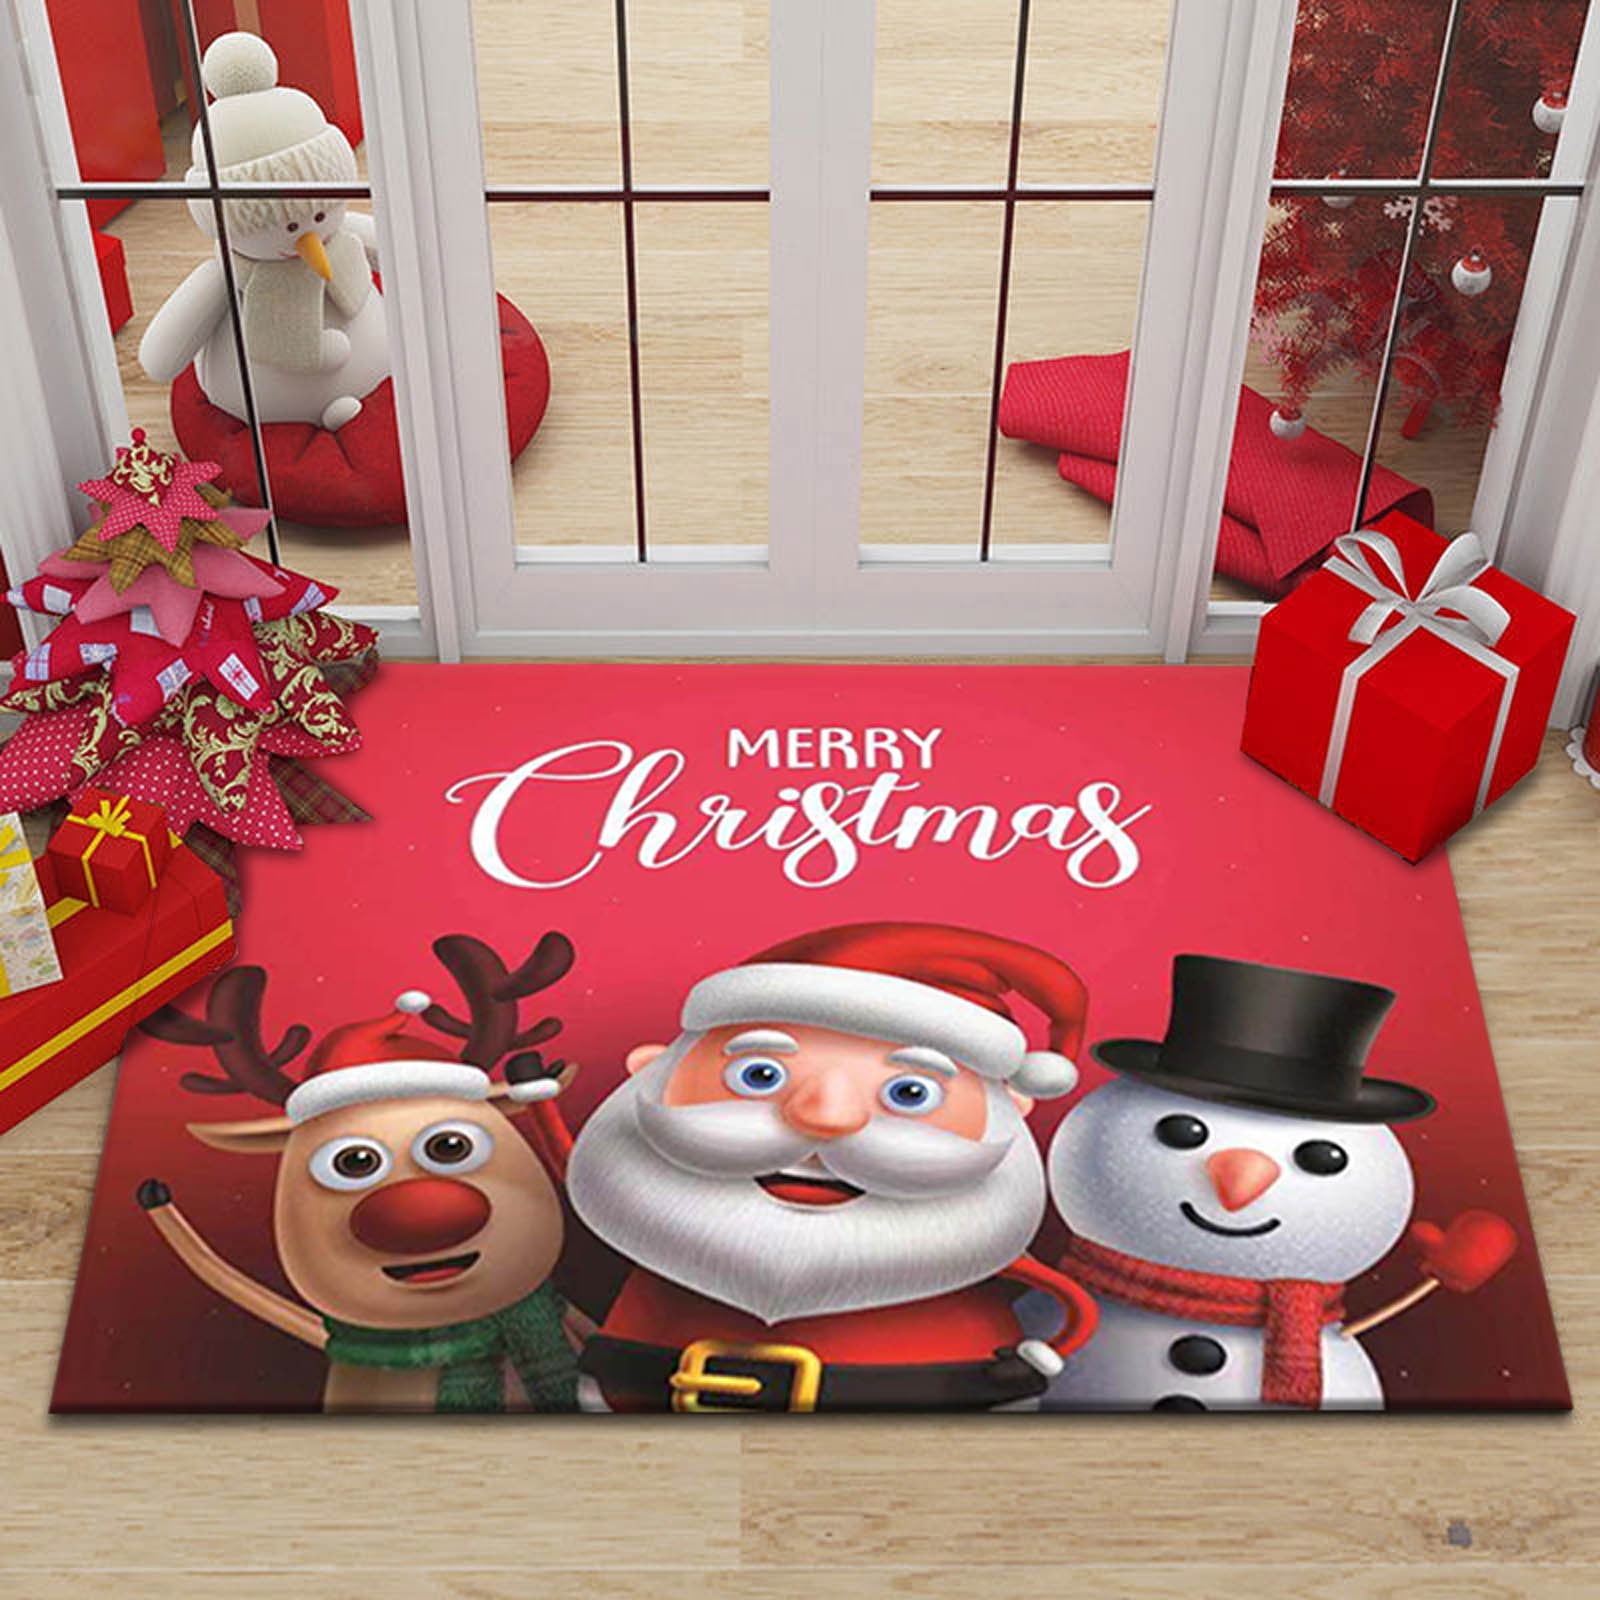 Mascot Hardware Welcome Script Doormat, Coir Outdoor Welcome Mat,  Christmas welcome Doormat for Home DÃ©cor - Yahoo Shopping